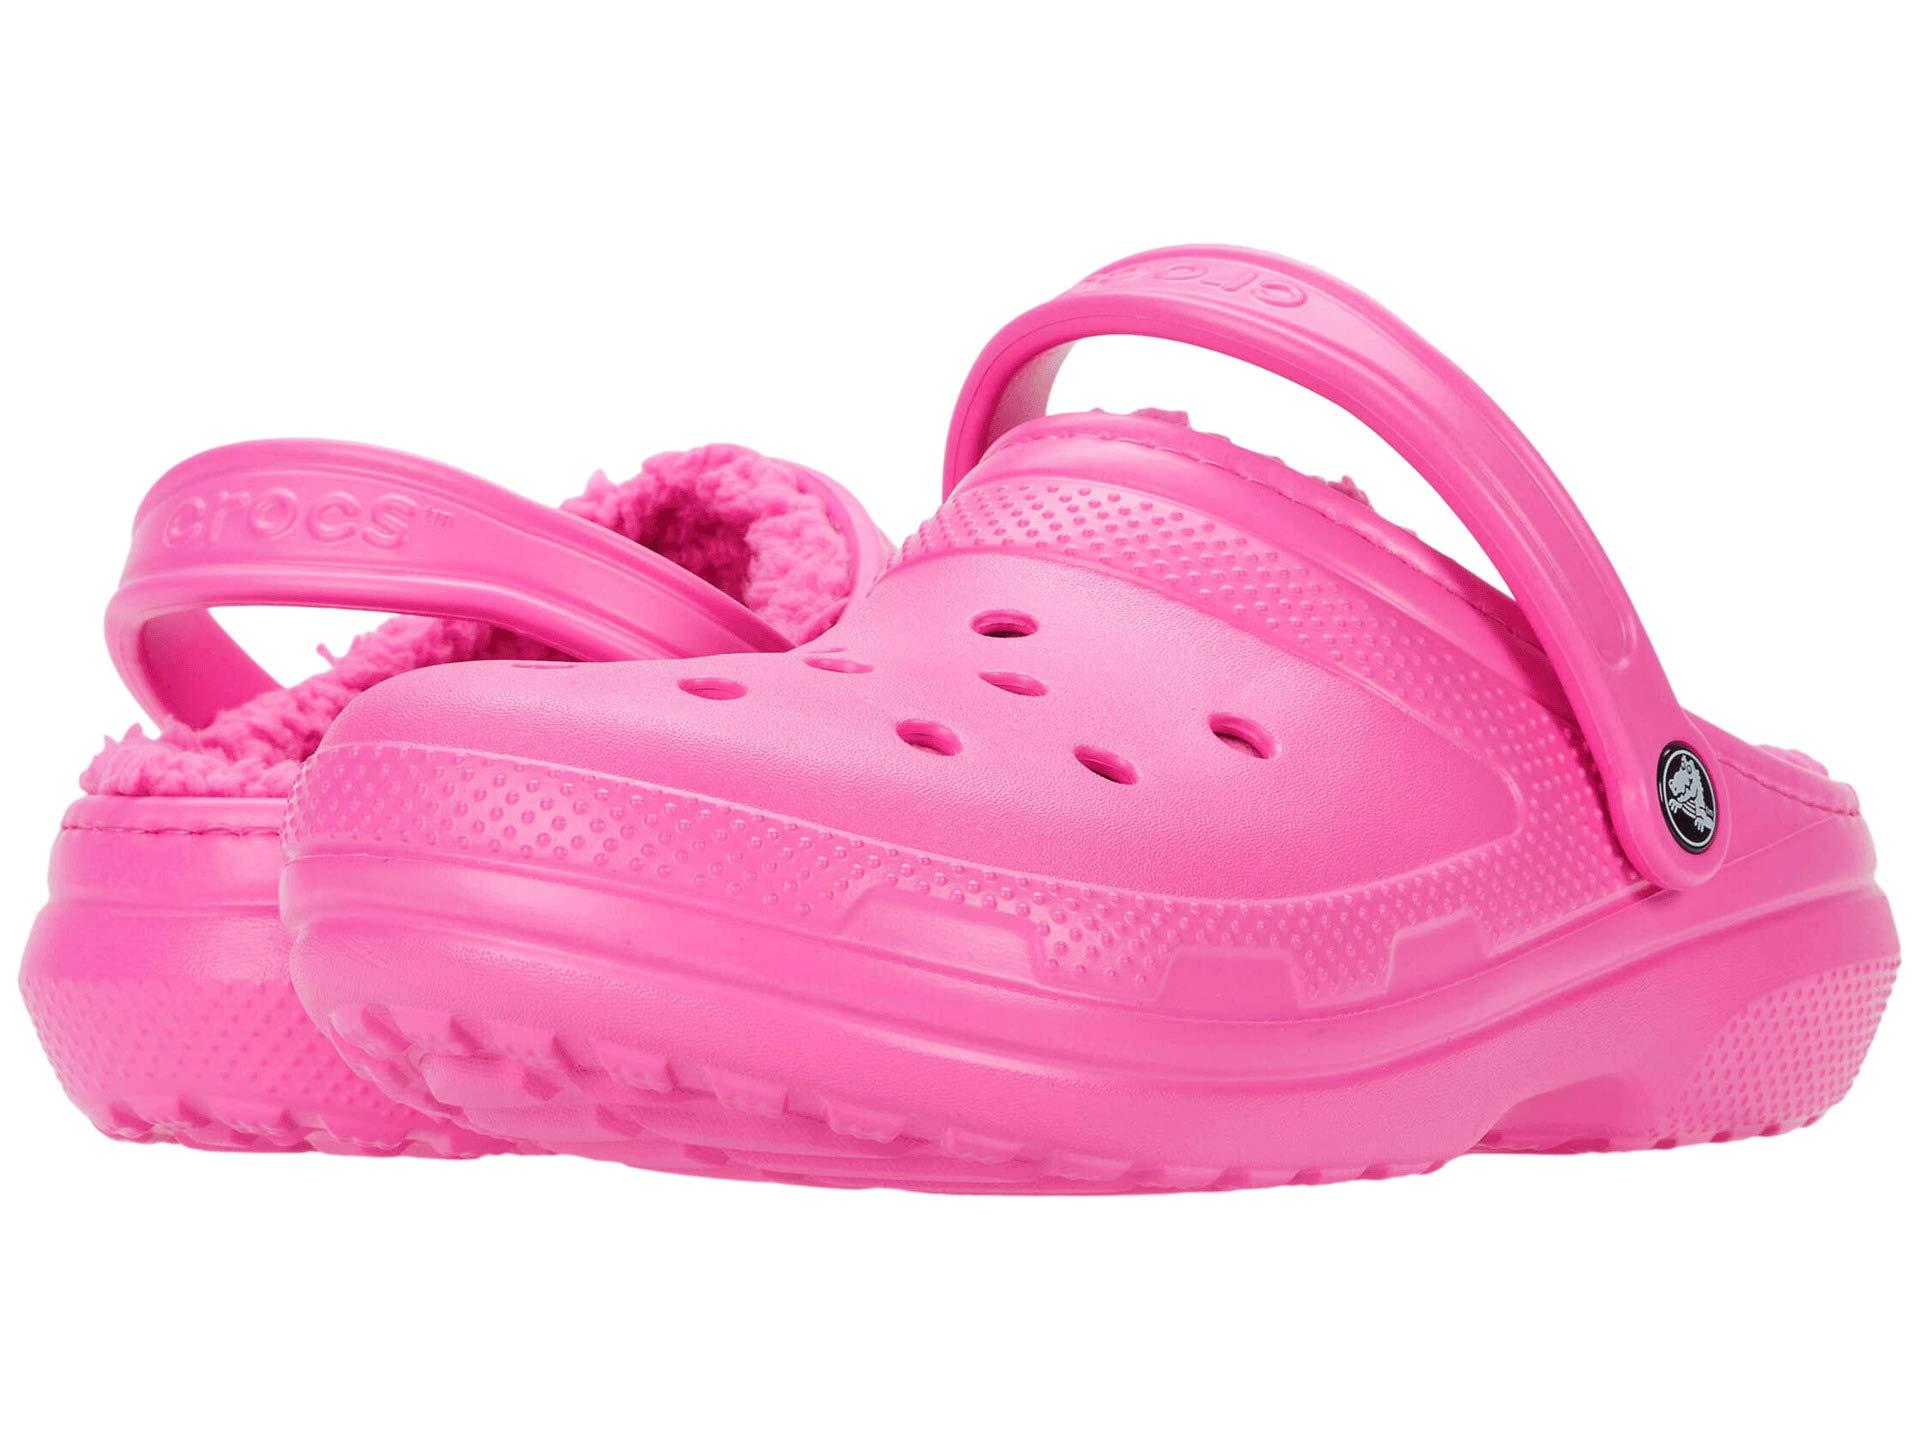 hot pink crocs with fur